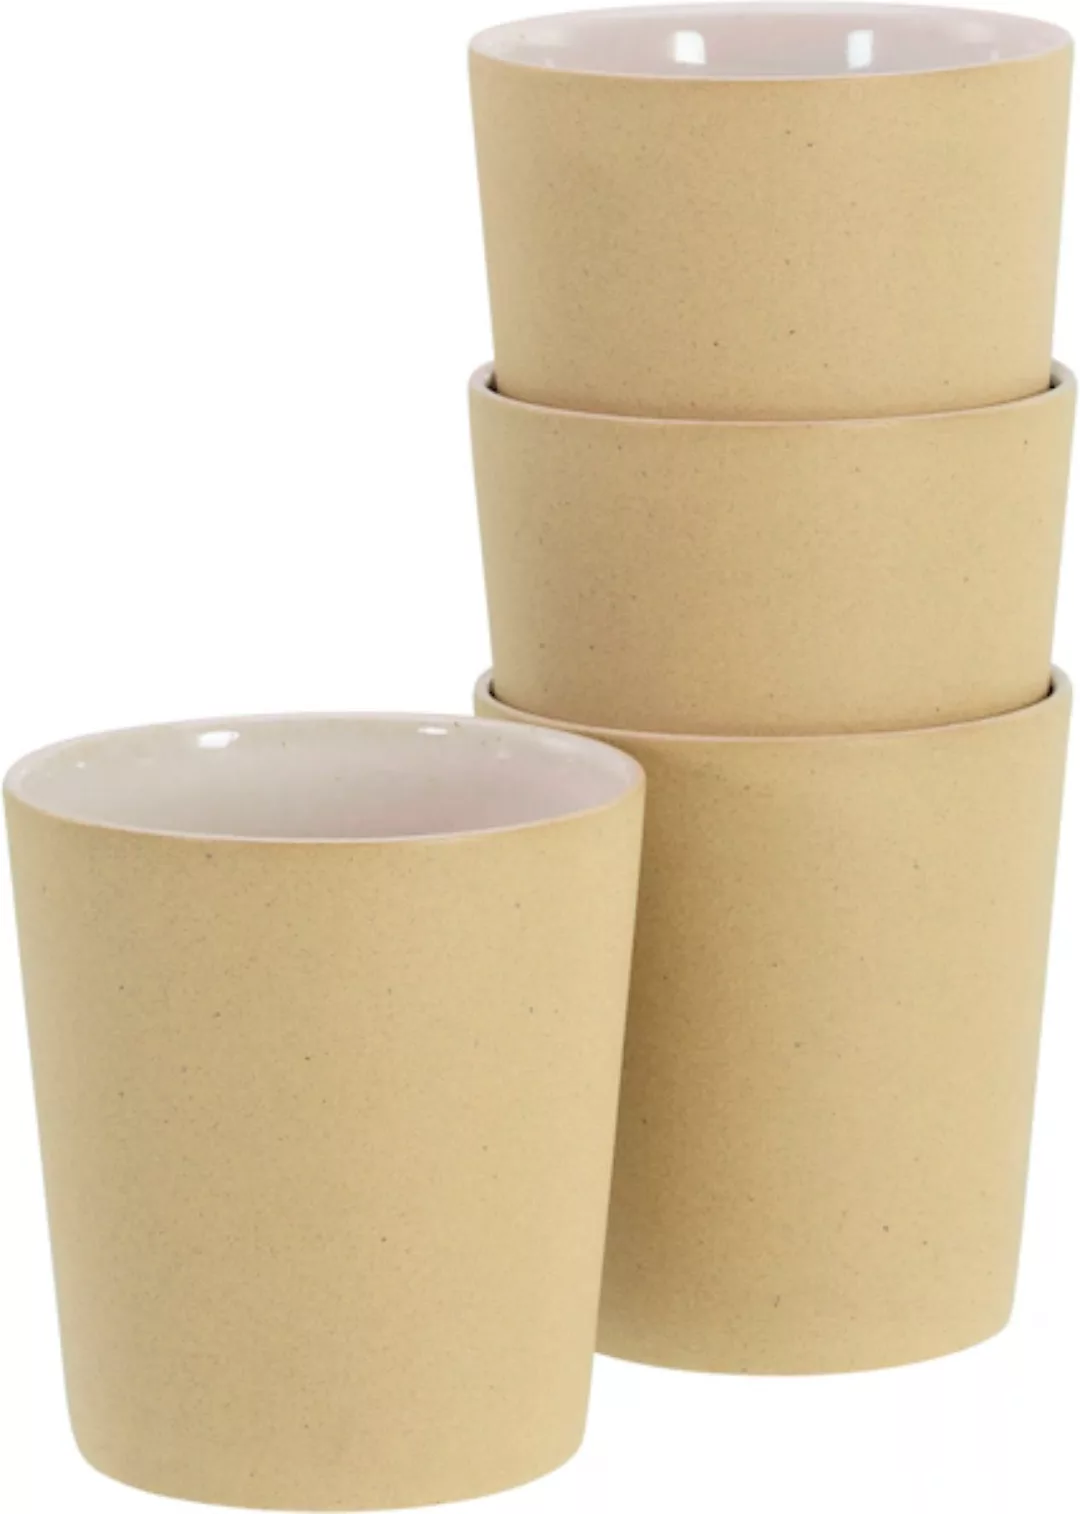 CreaTable Kaffeebecher »Futuro«, Set, 4 tlg., 500 ml günstig online kaufen